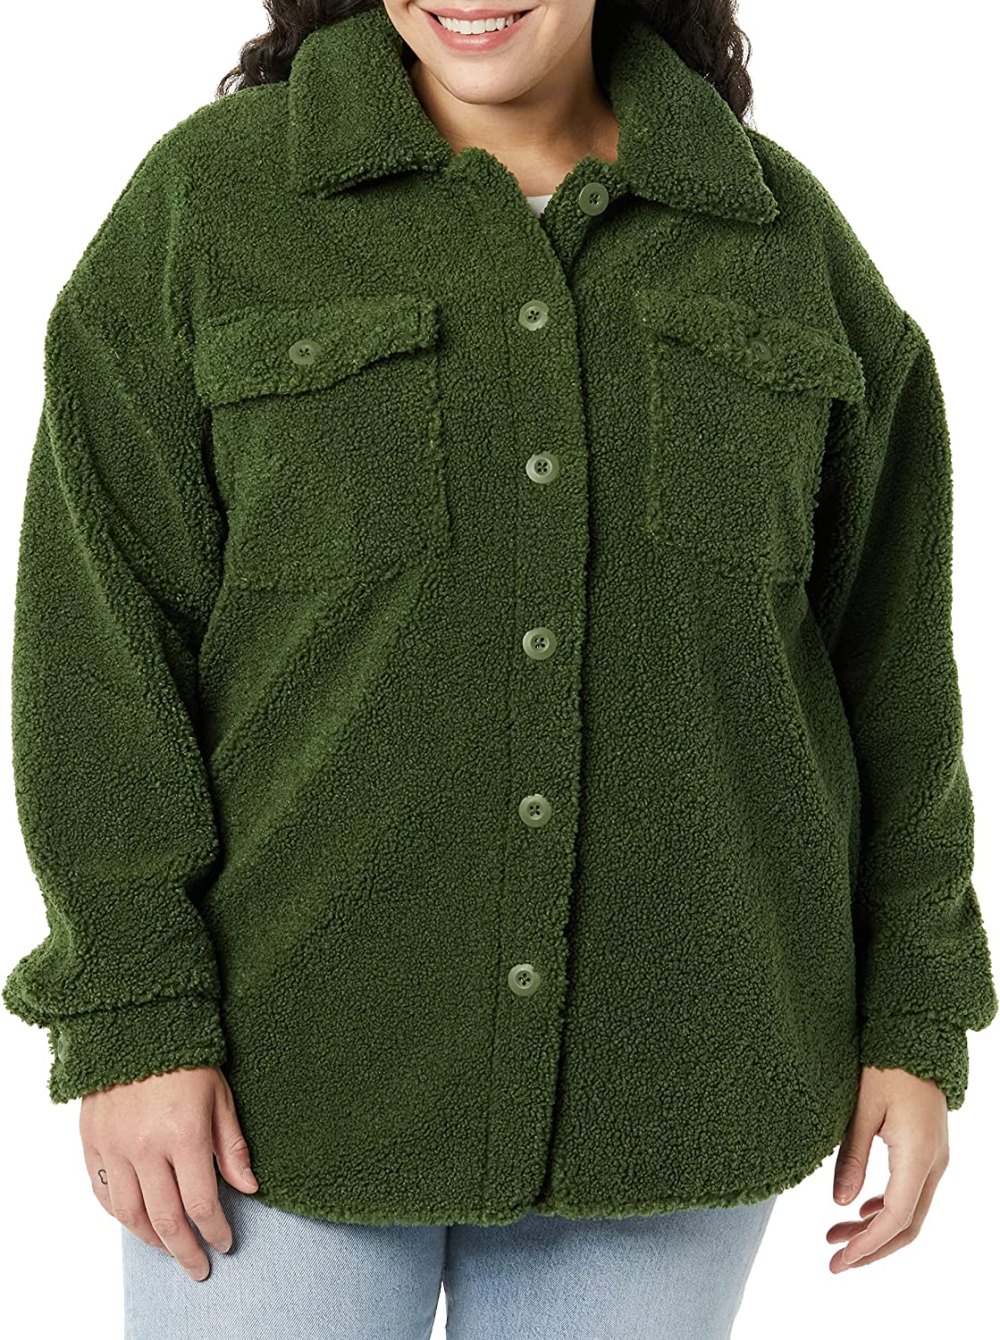 Goodthreads Women's Oversized Teddy Sherpa Shirt Jacket